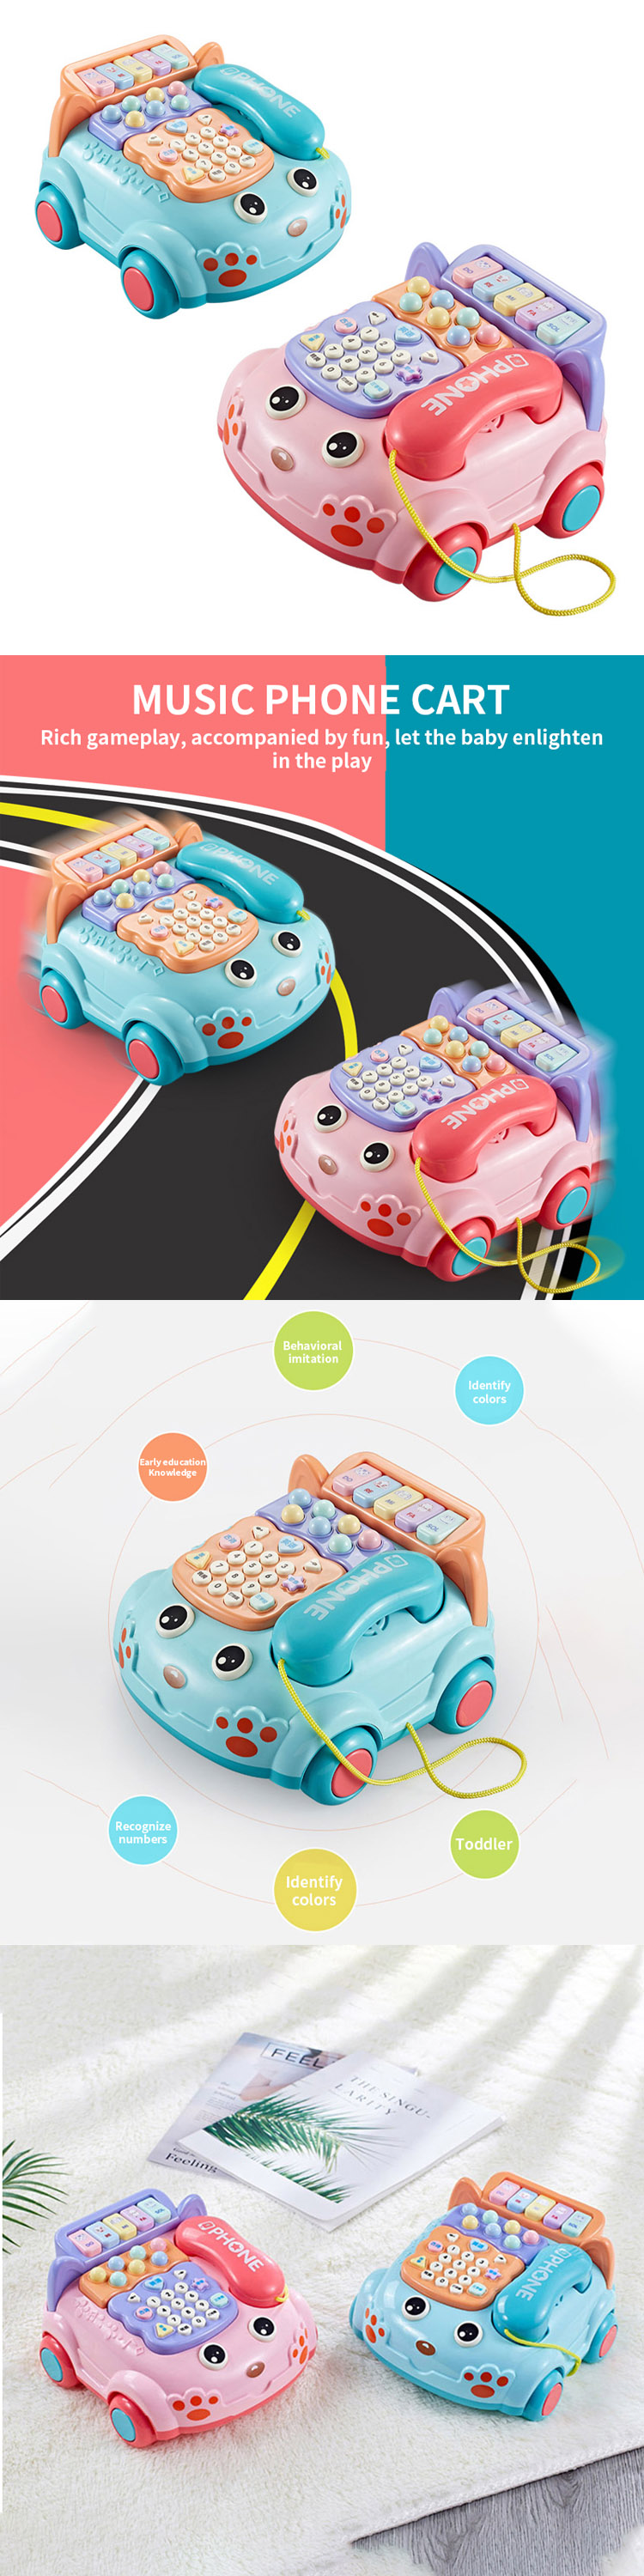 Simulated baby phone toys children smart music phone